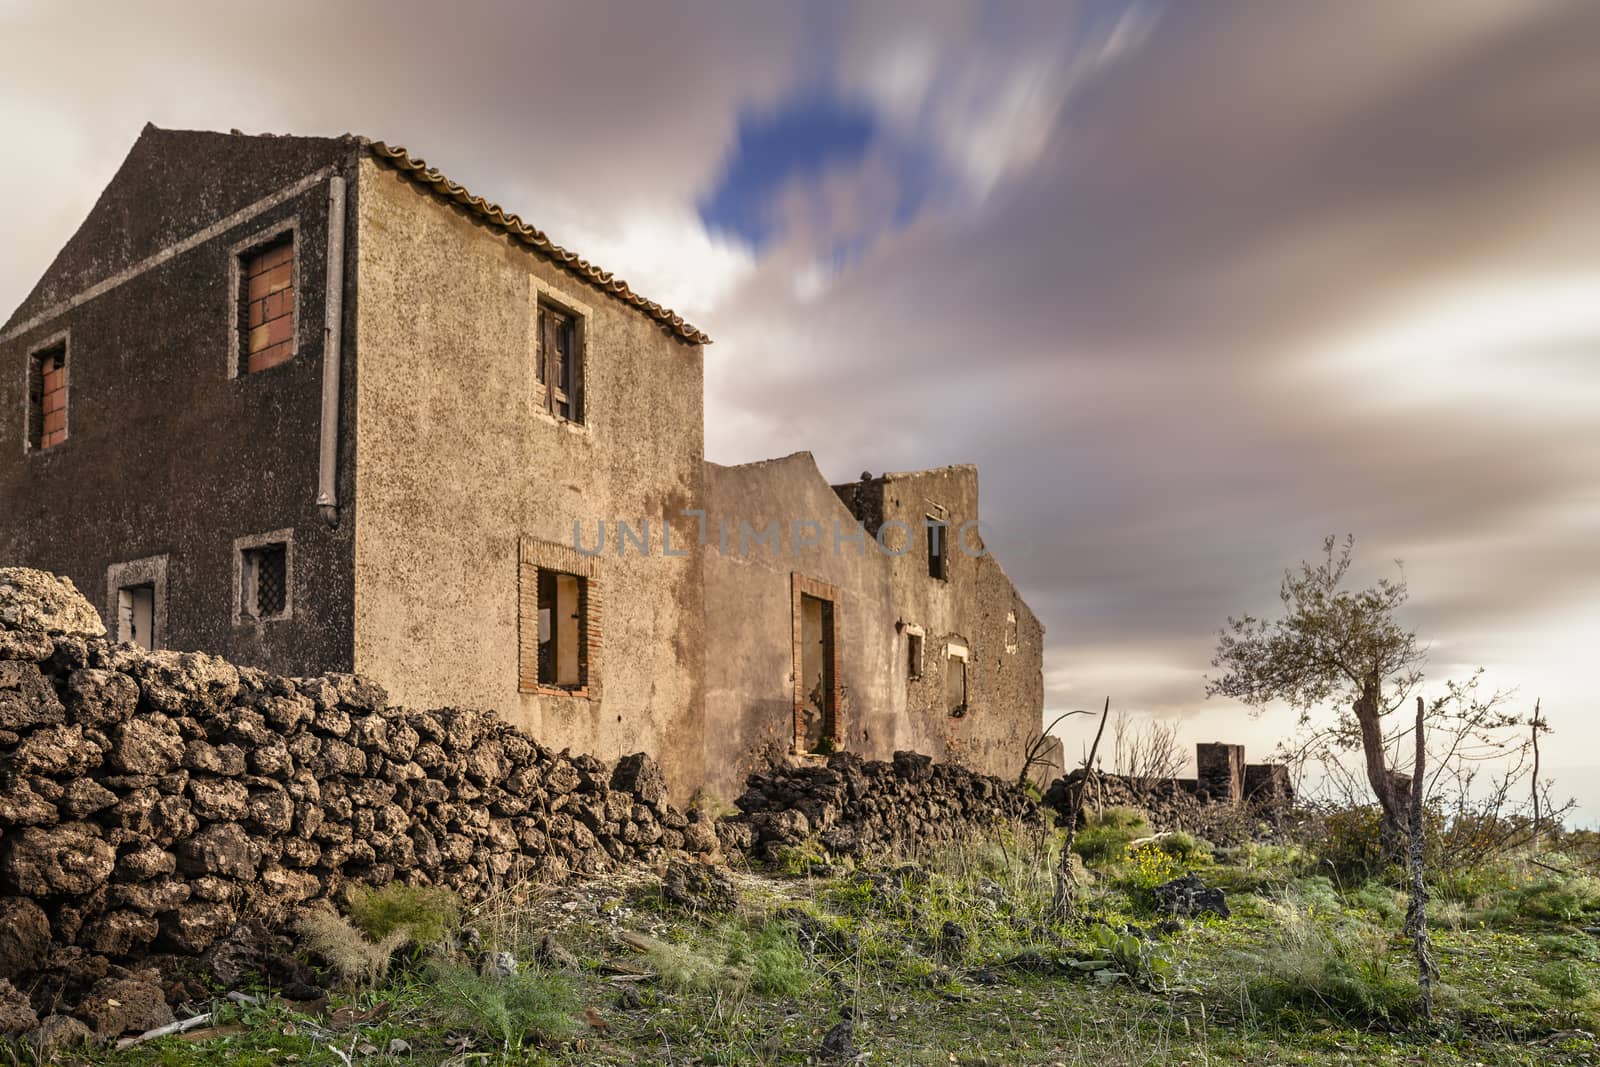 An old abandoned farm barn in Sicily, Italy